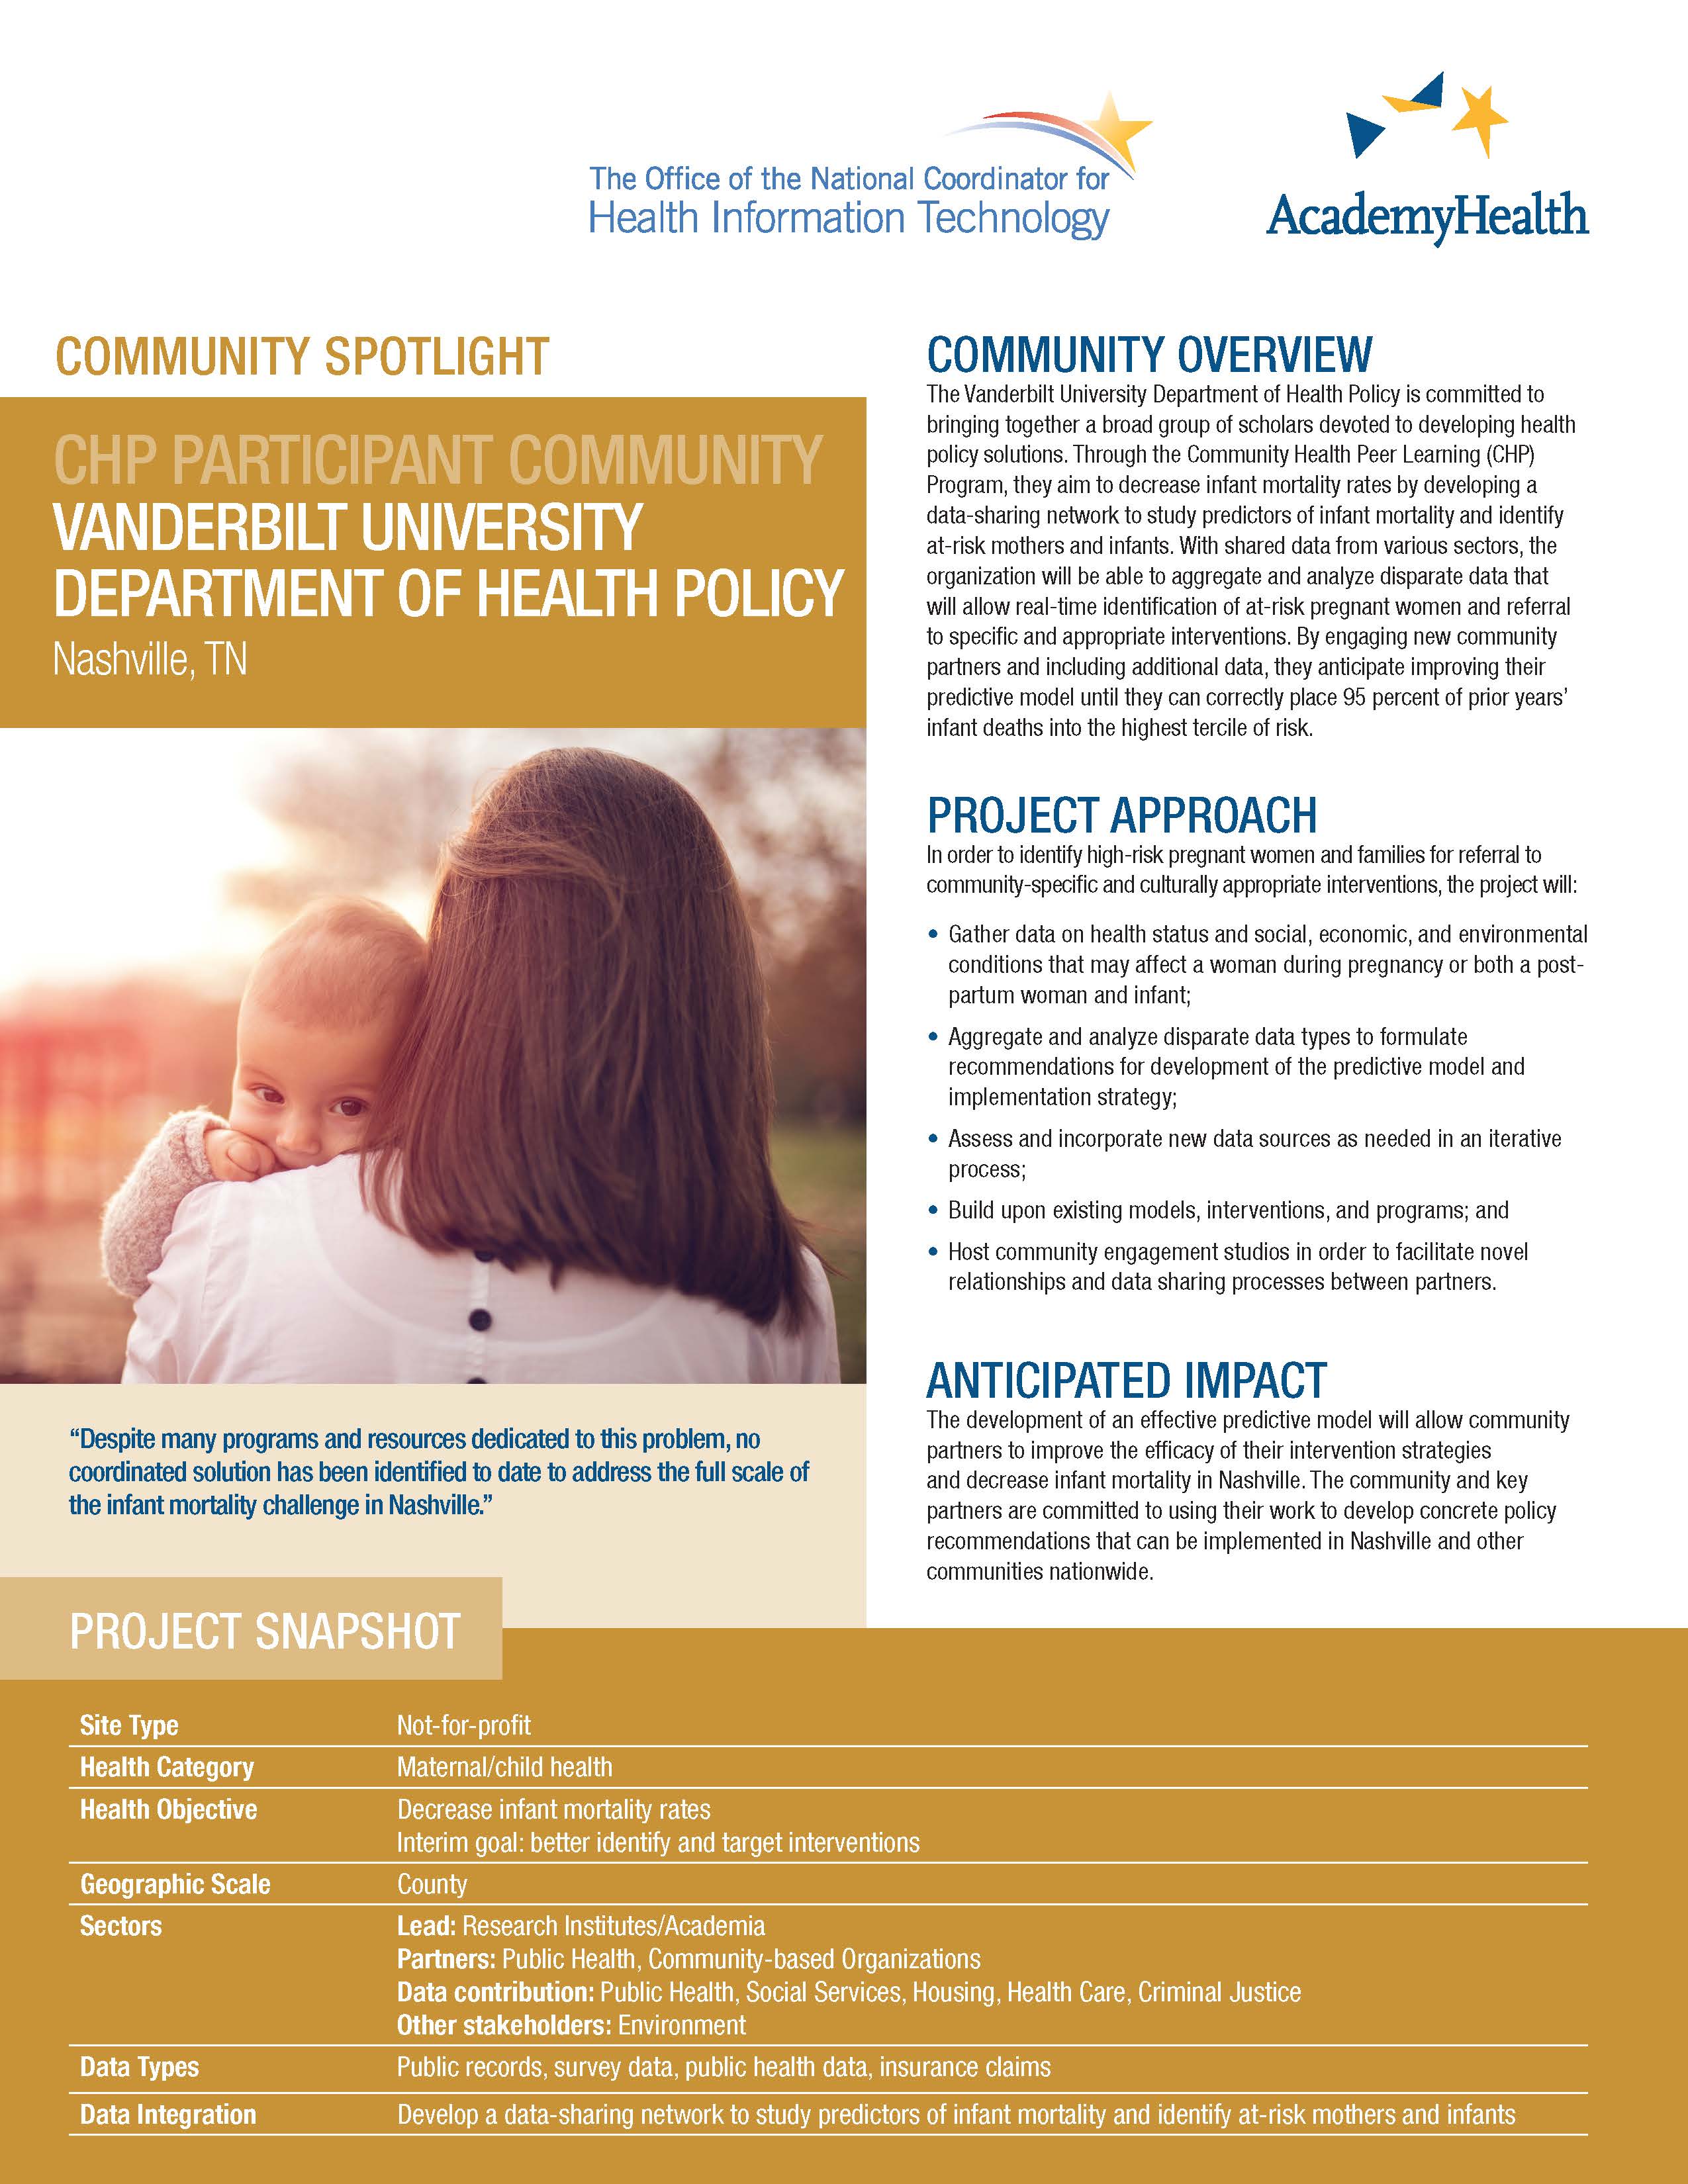 Vanderbilt University Department of Health Policy - FINAL_Page_1.jpg